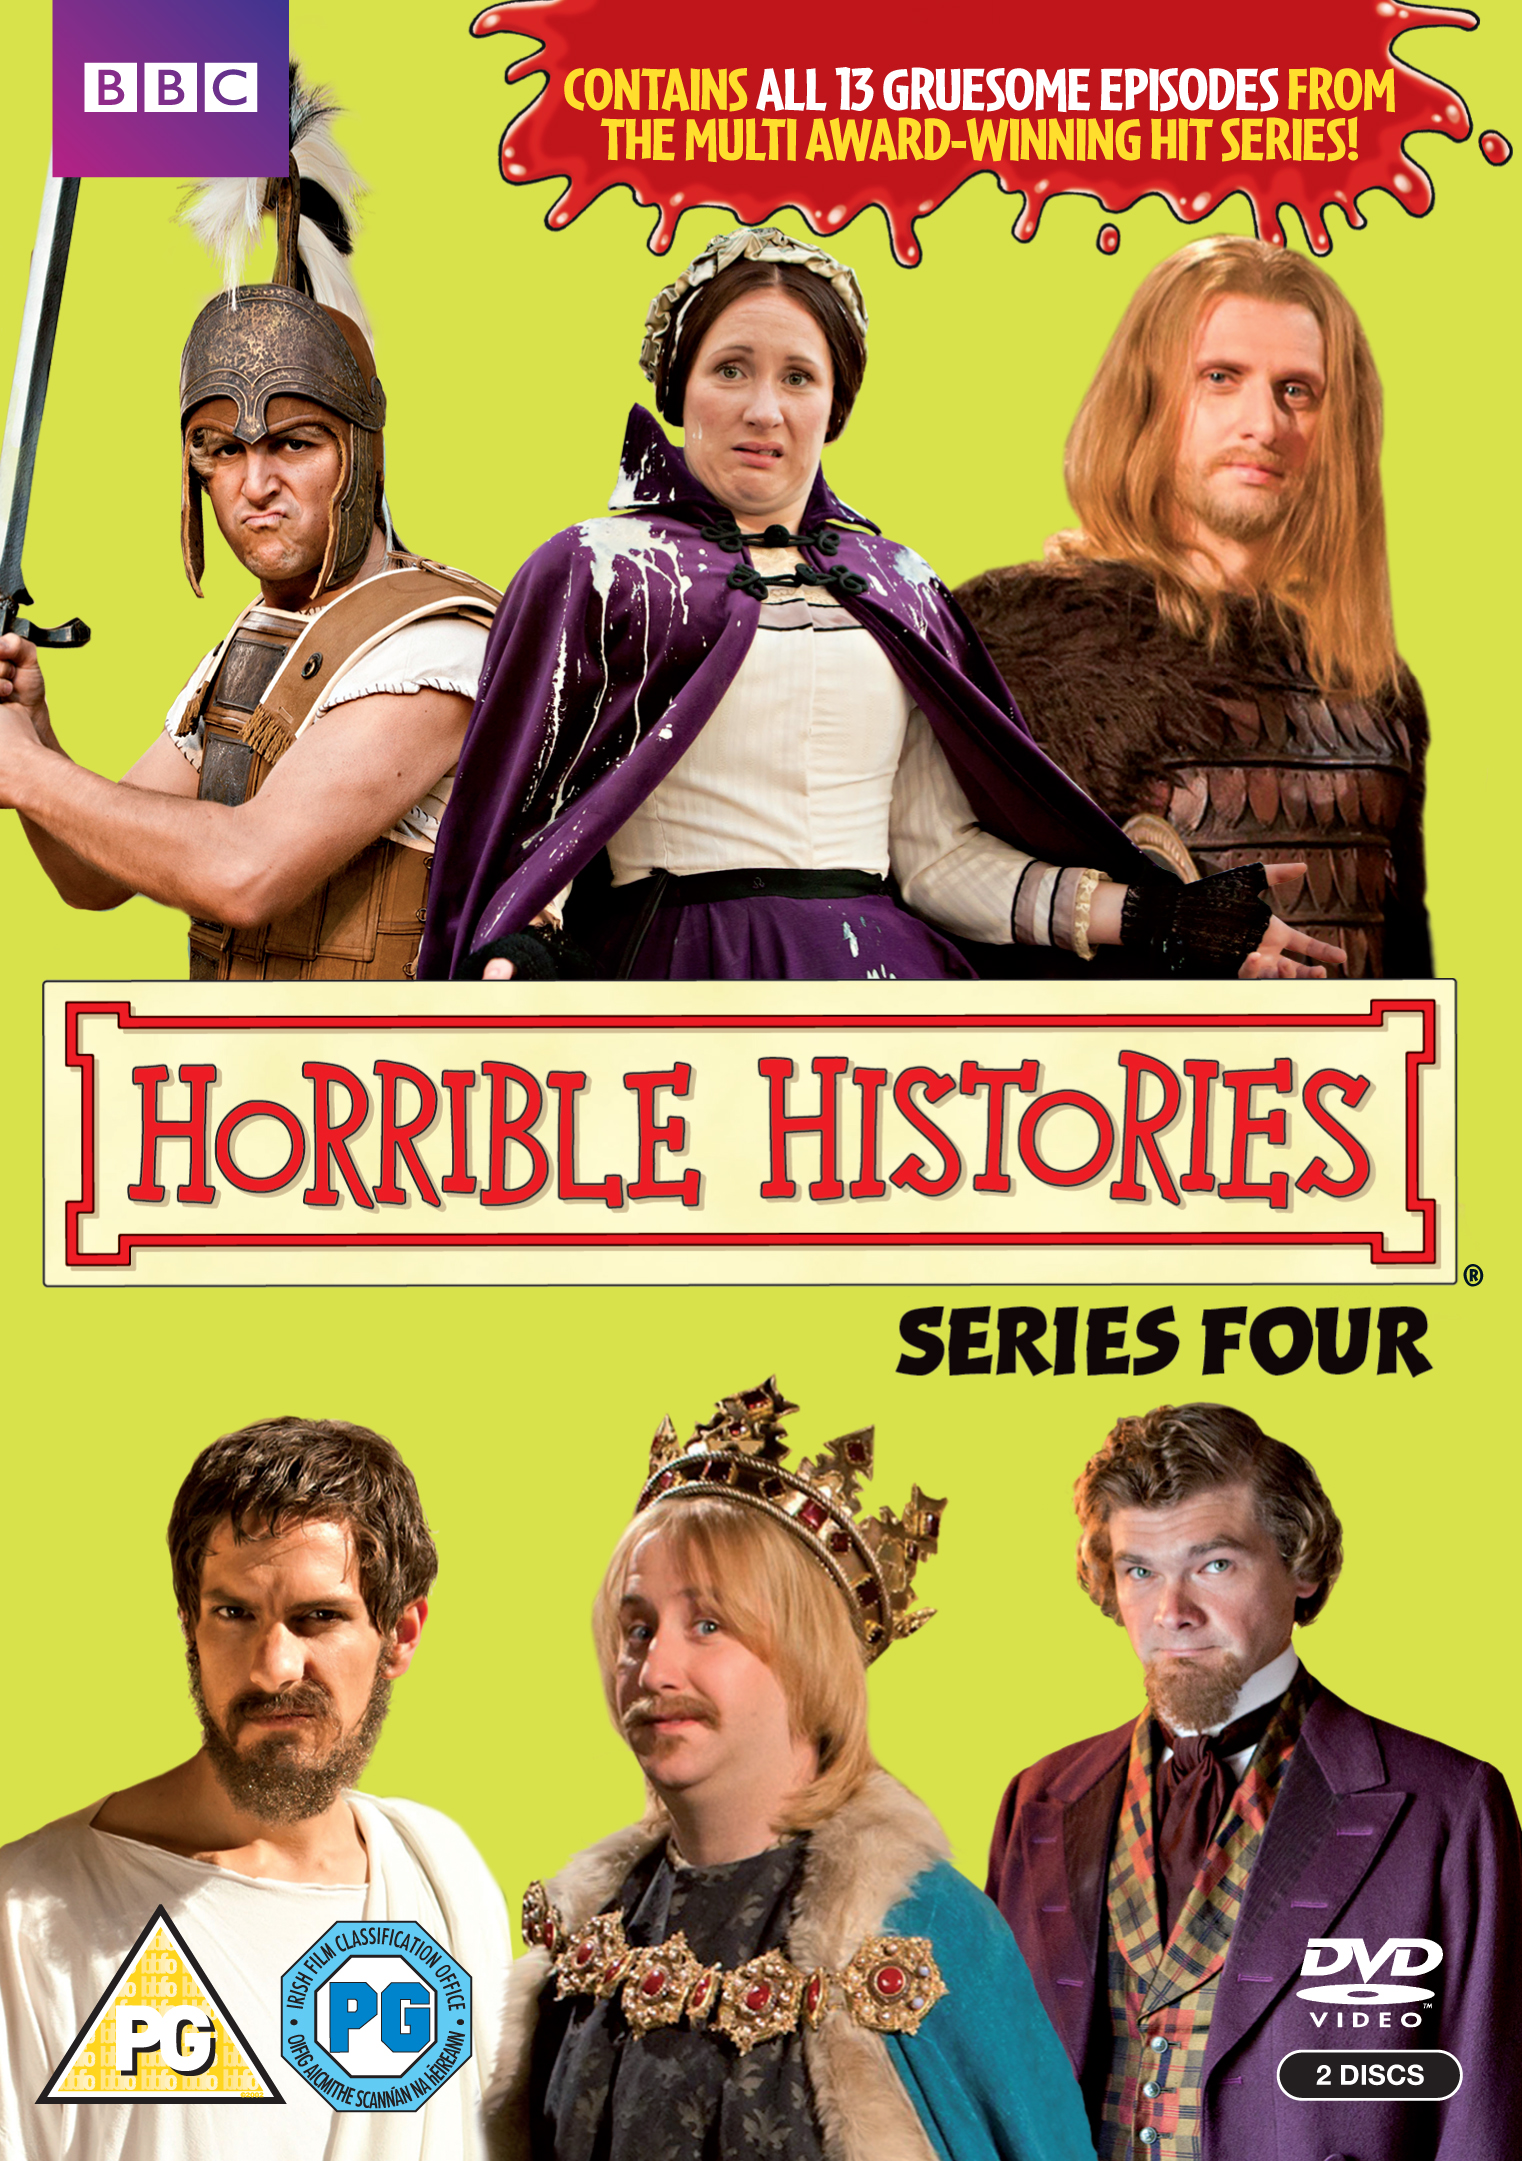 BBC Horrible Histories: Series Four